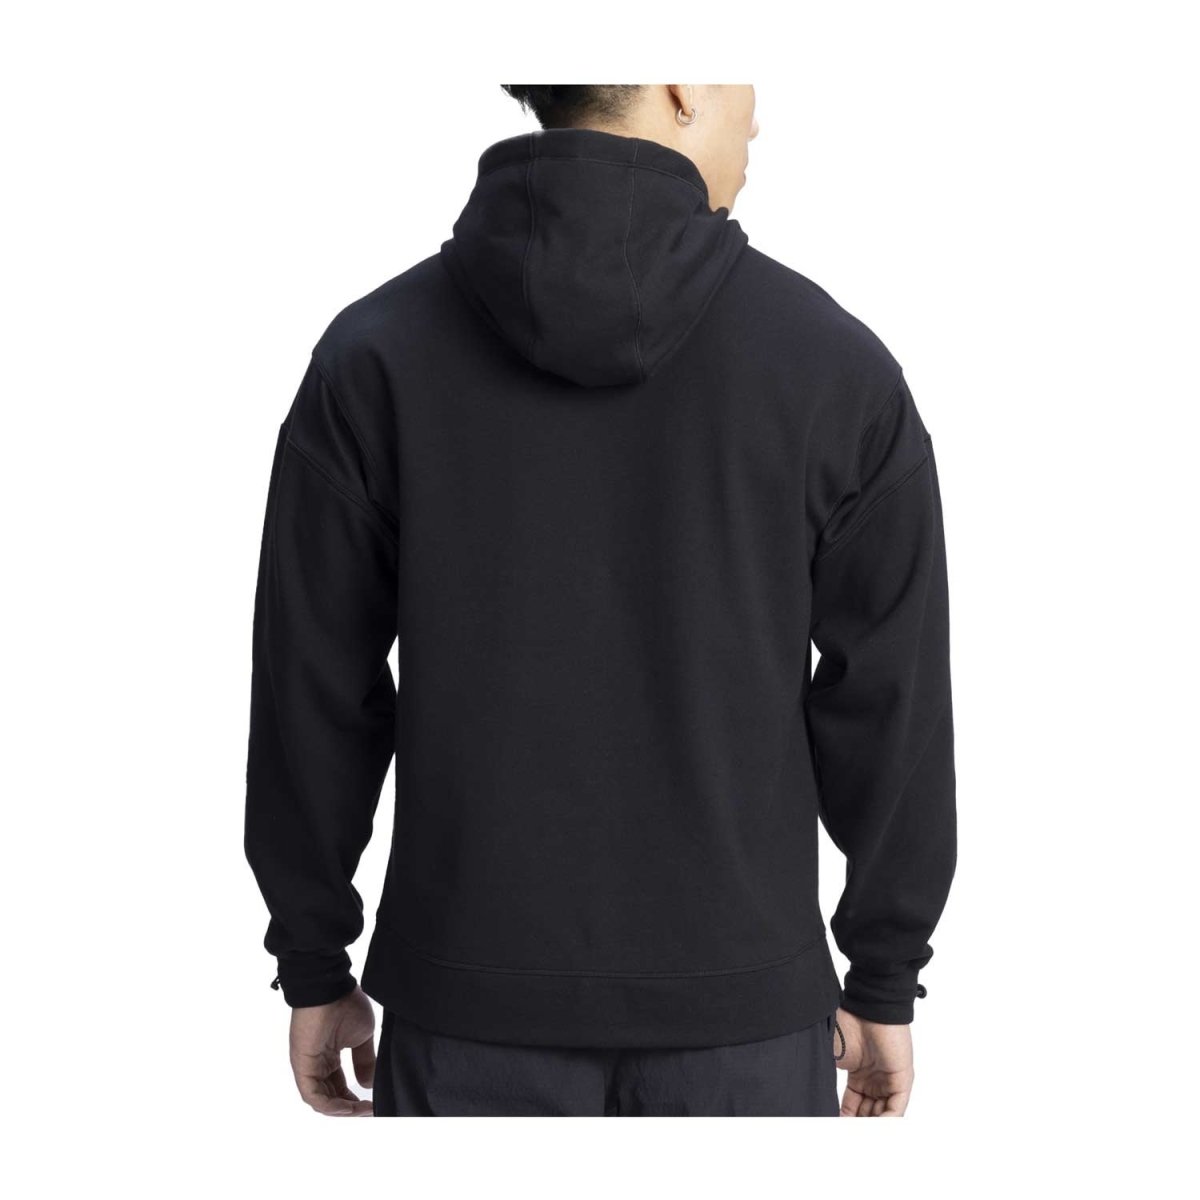 Team Rocket HQ Collection Black Fleece Pullover Hoodie - Adult